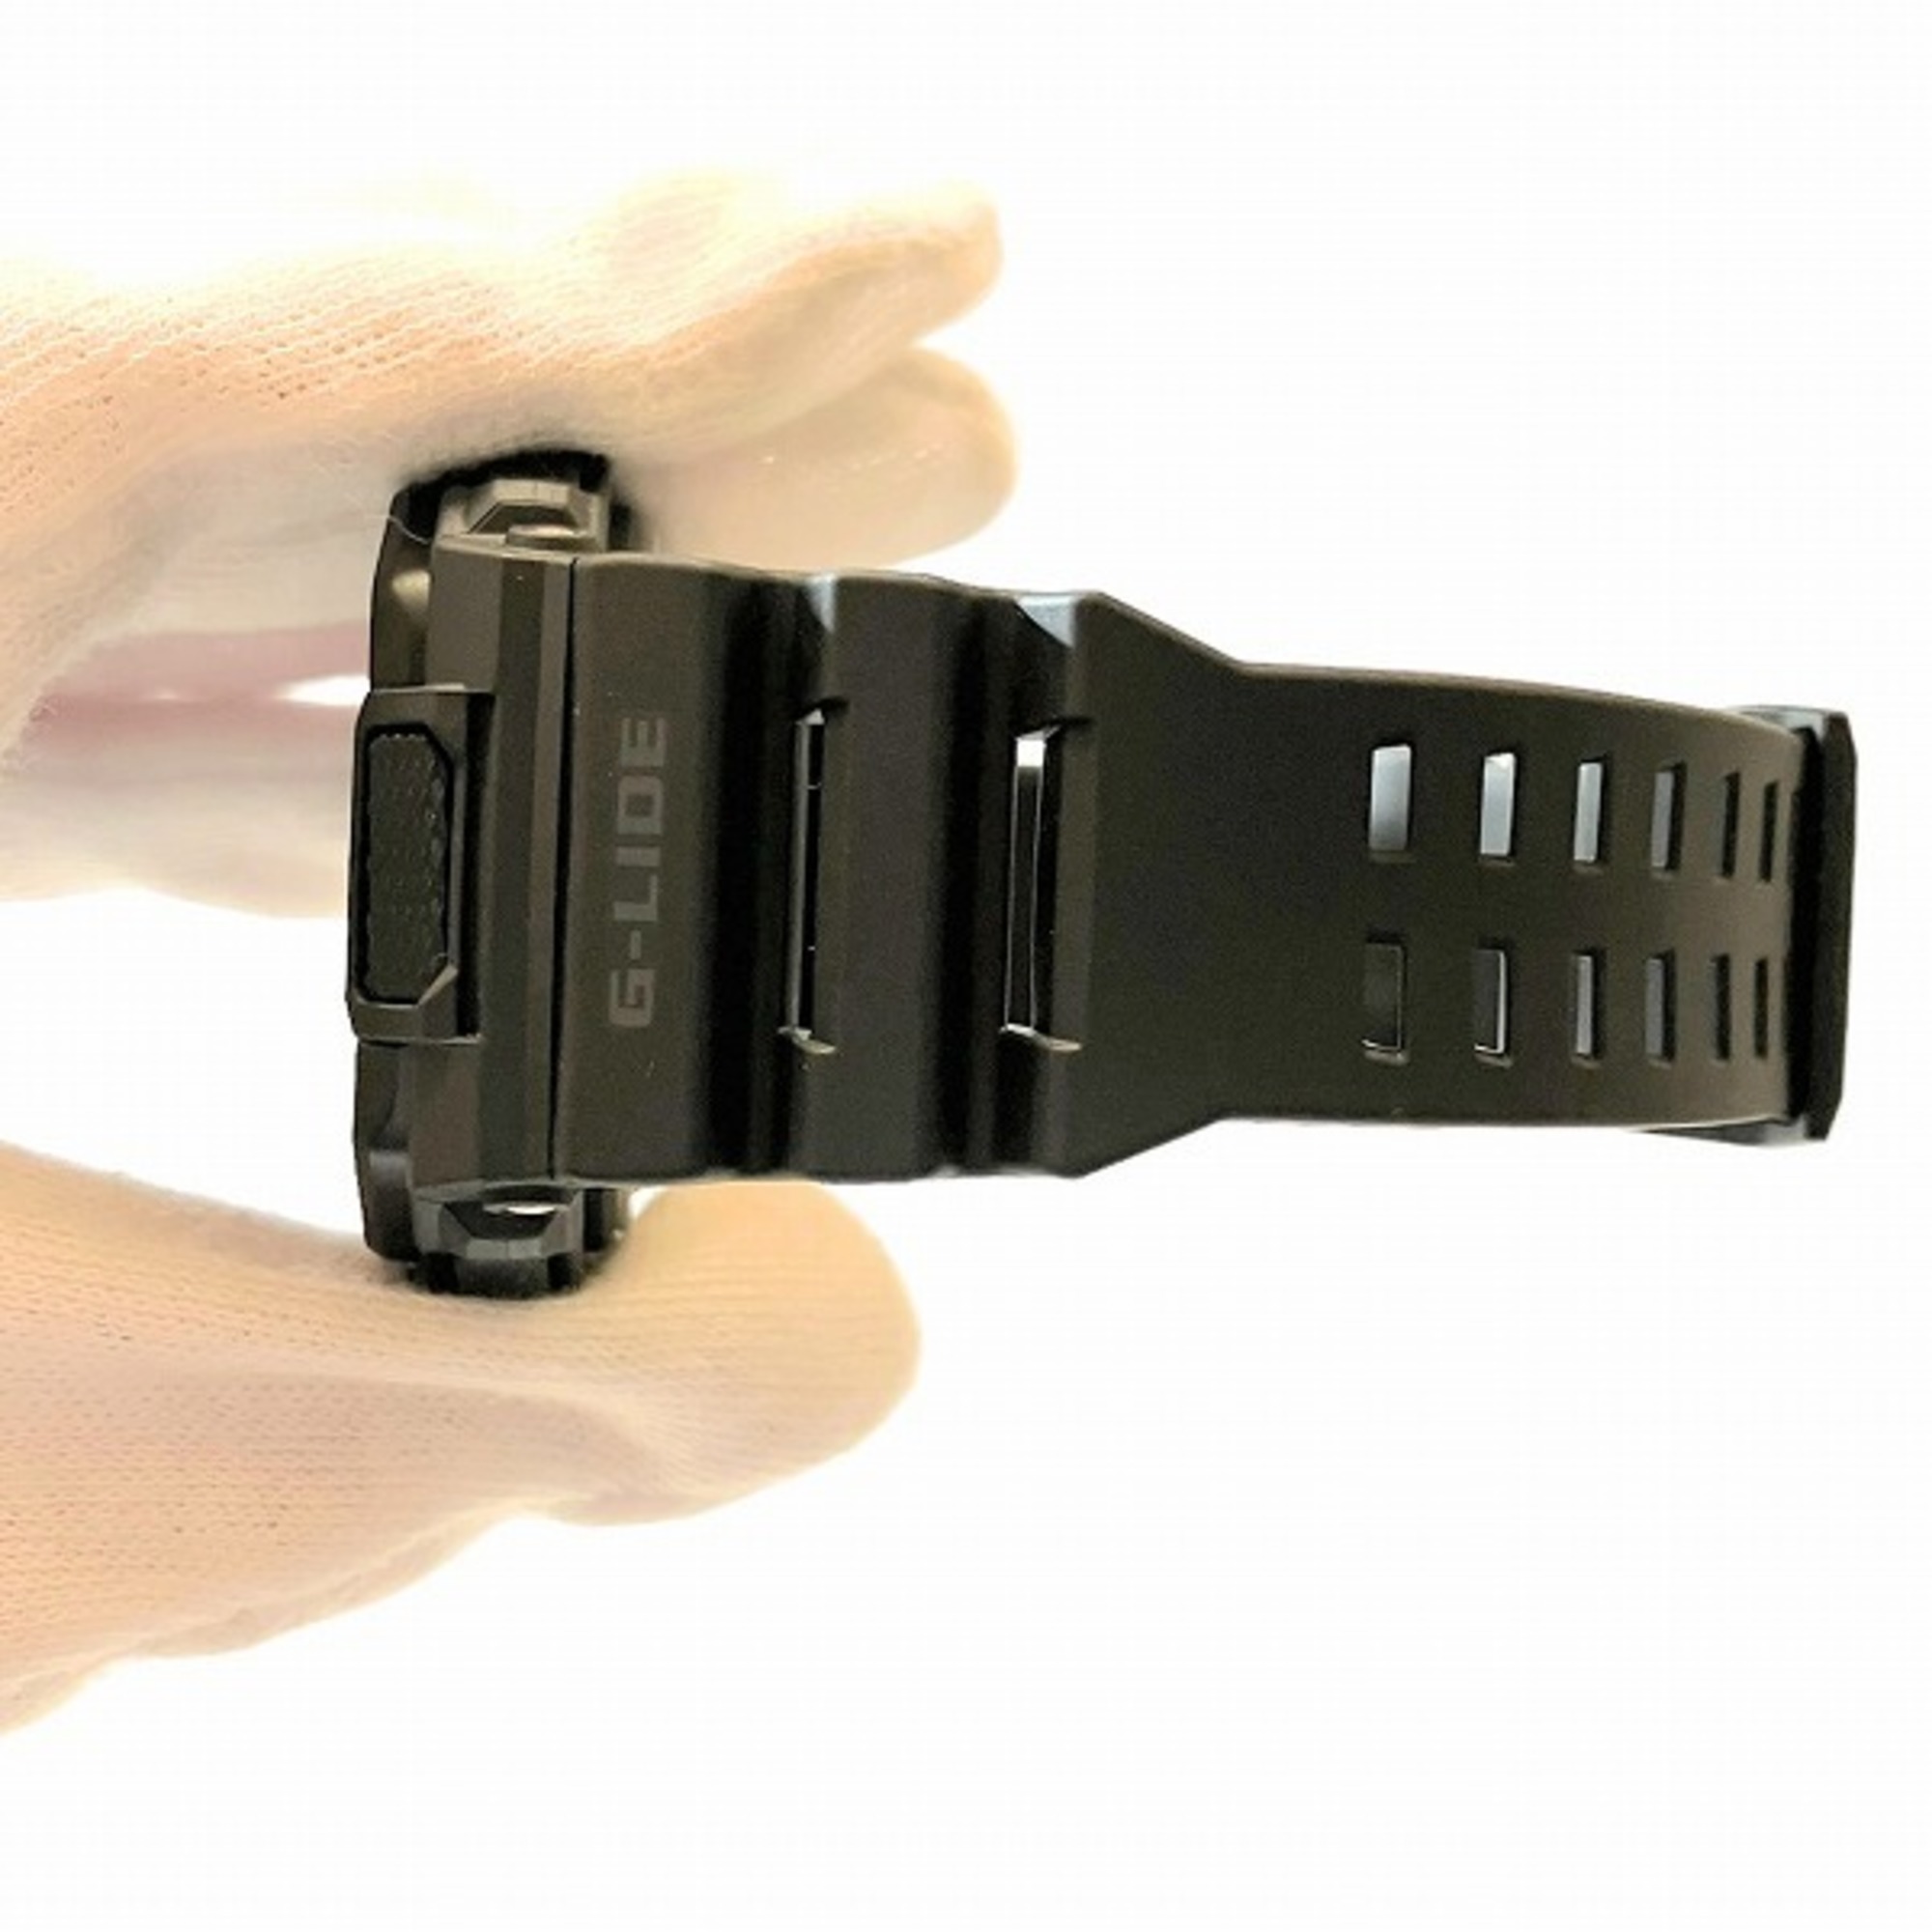 Casio G-Shock GBX-100NS-1JF Quartz Watch Men's Product